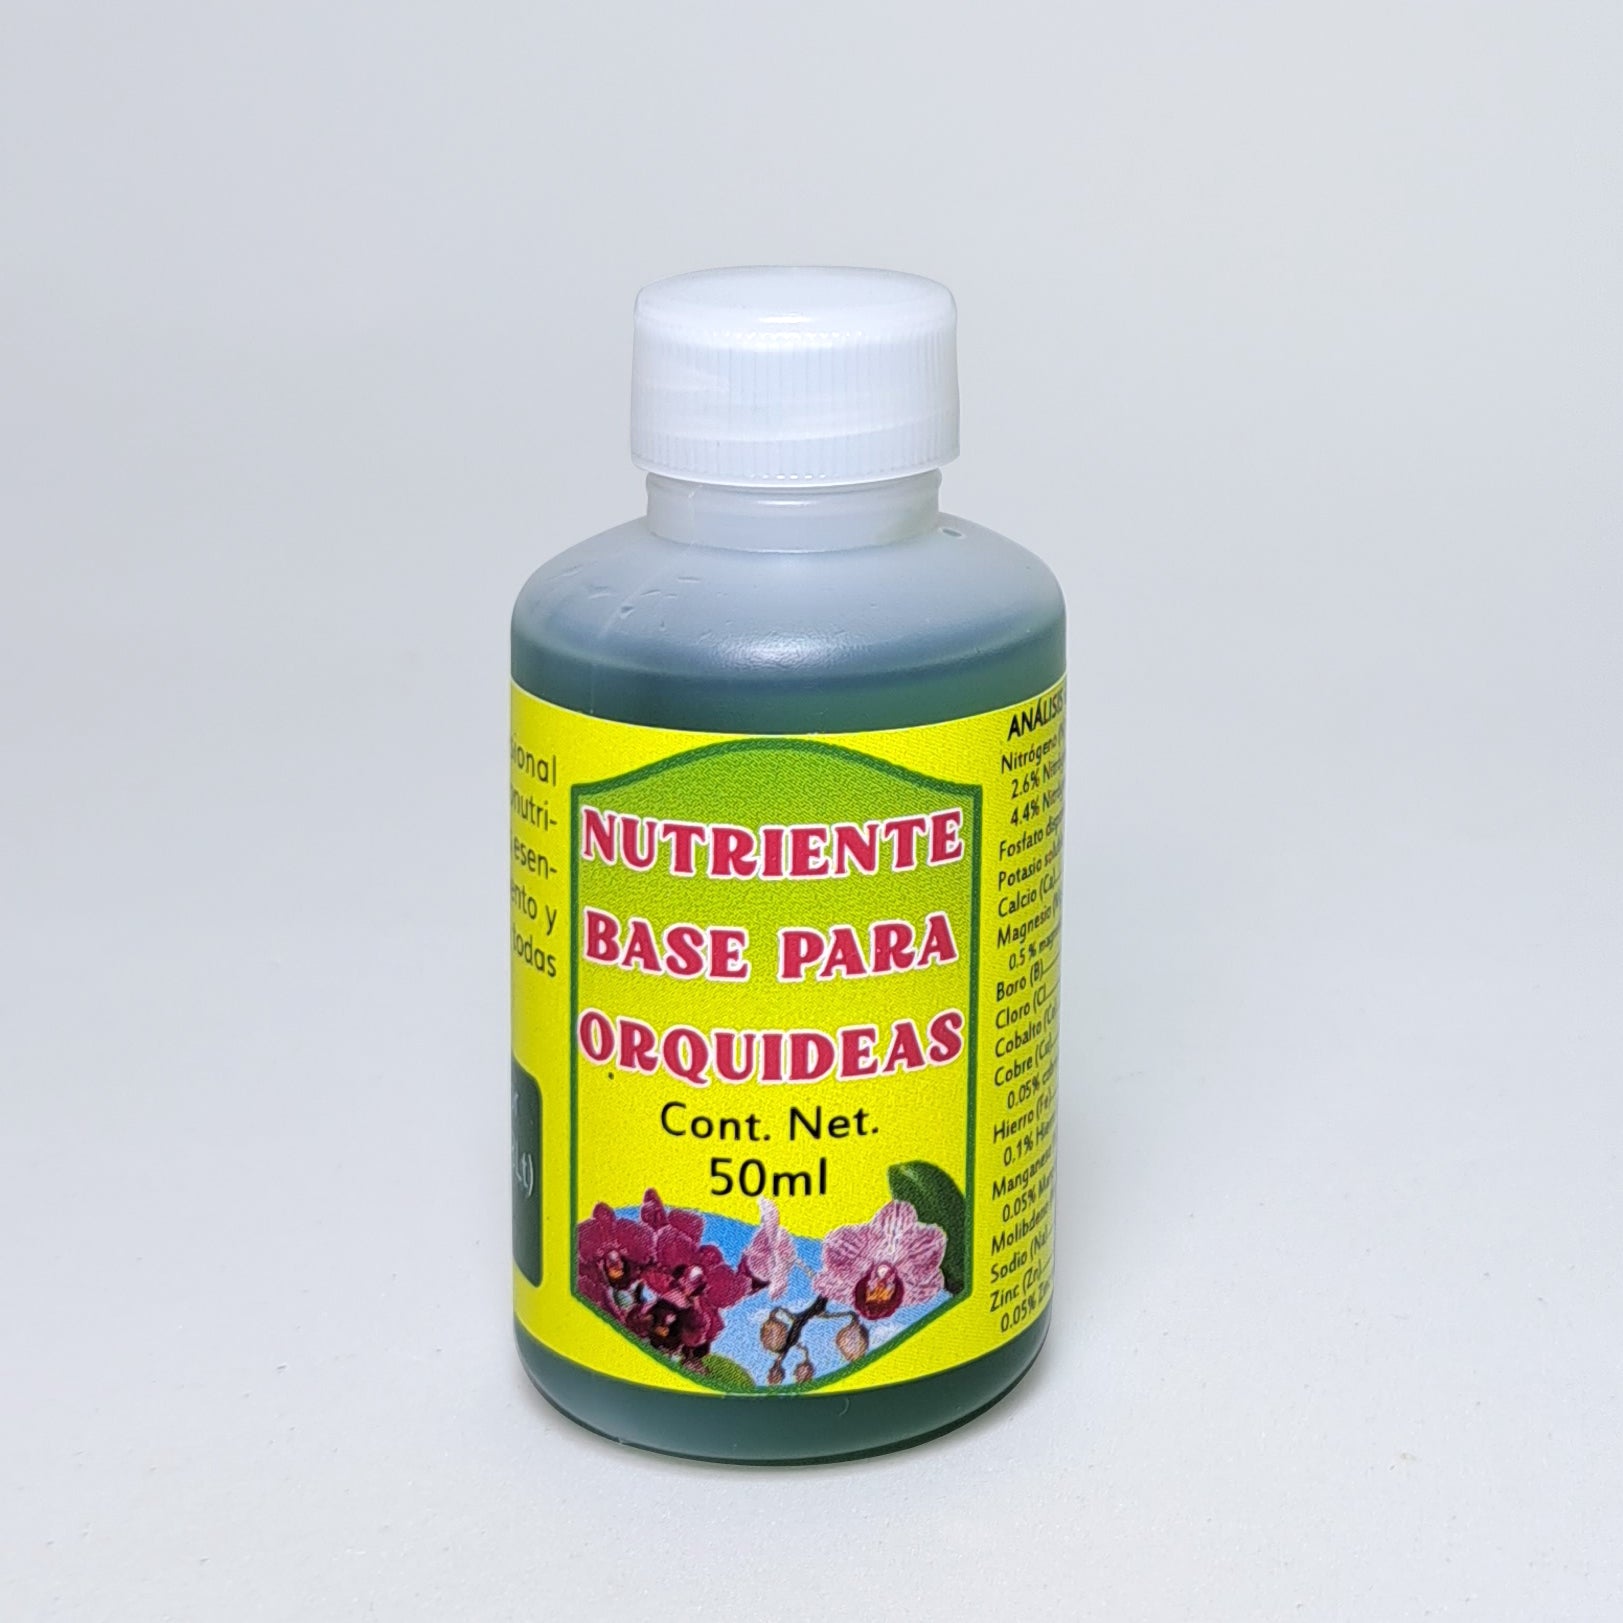 Nutriente Base para Orquideas 50ml